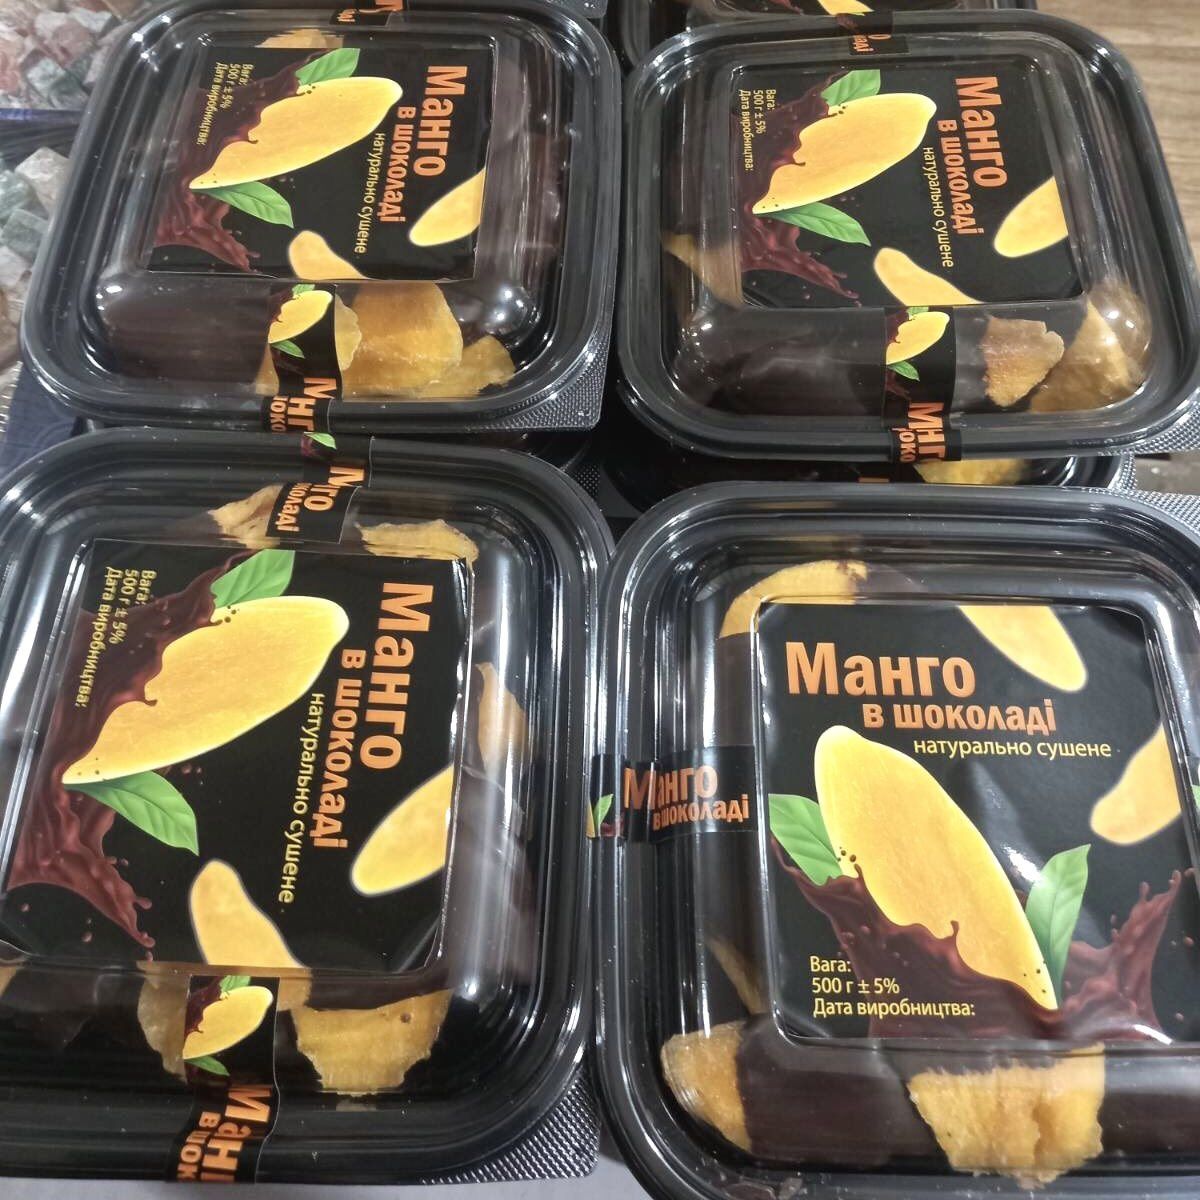 Сушеное манго в шоколаде,  500 грамм. (190 грн)